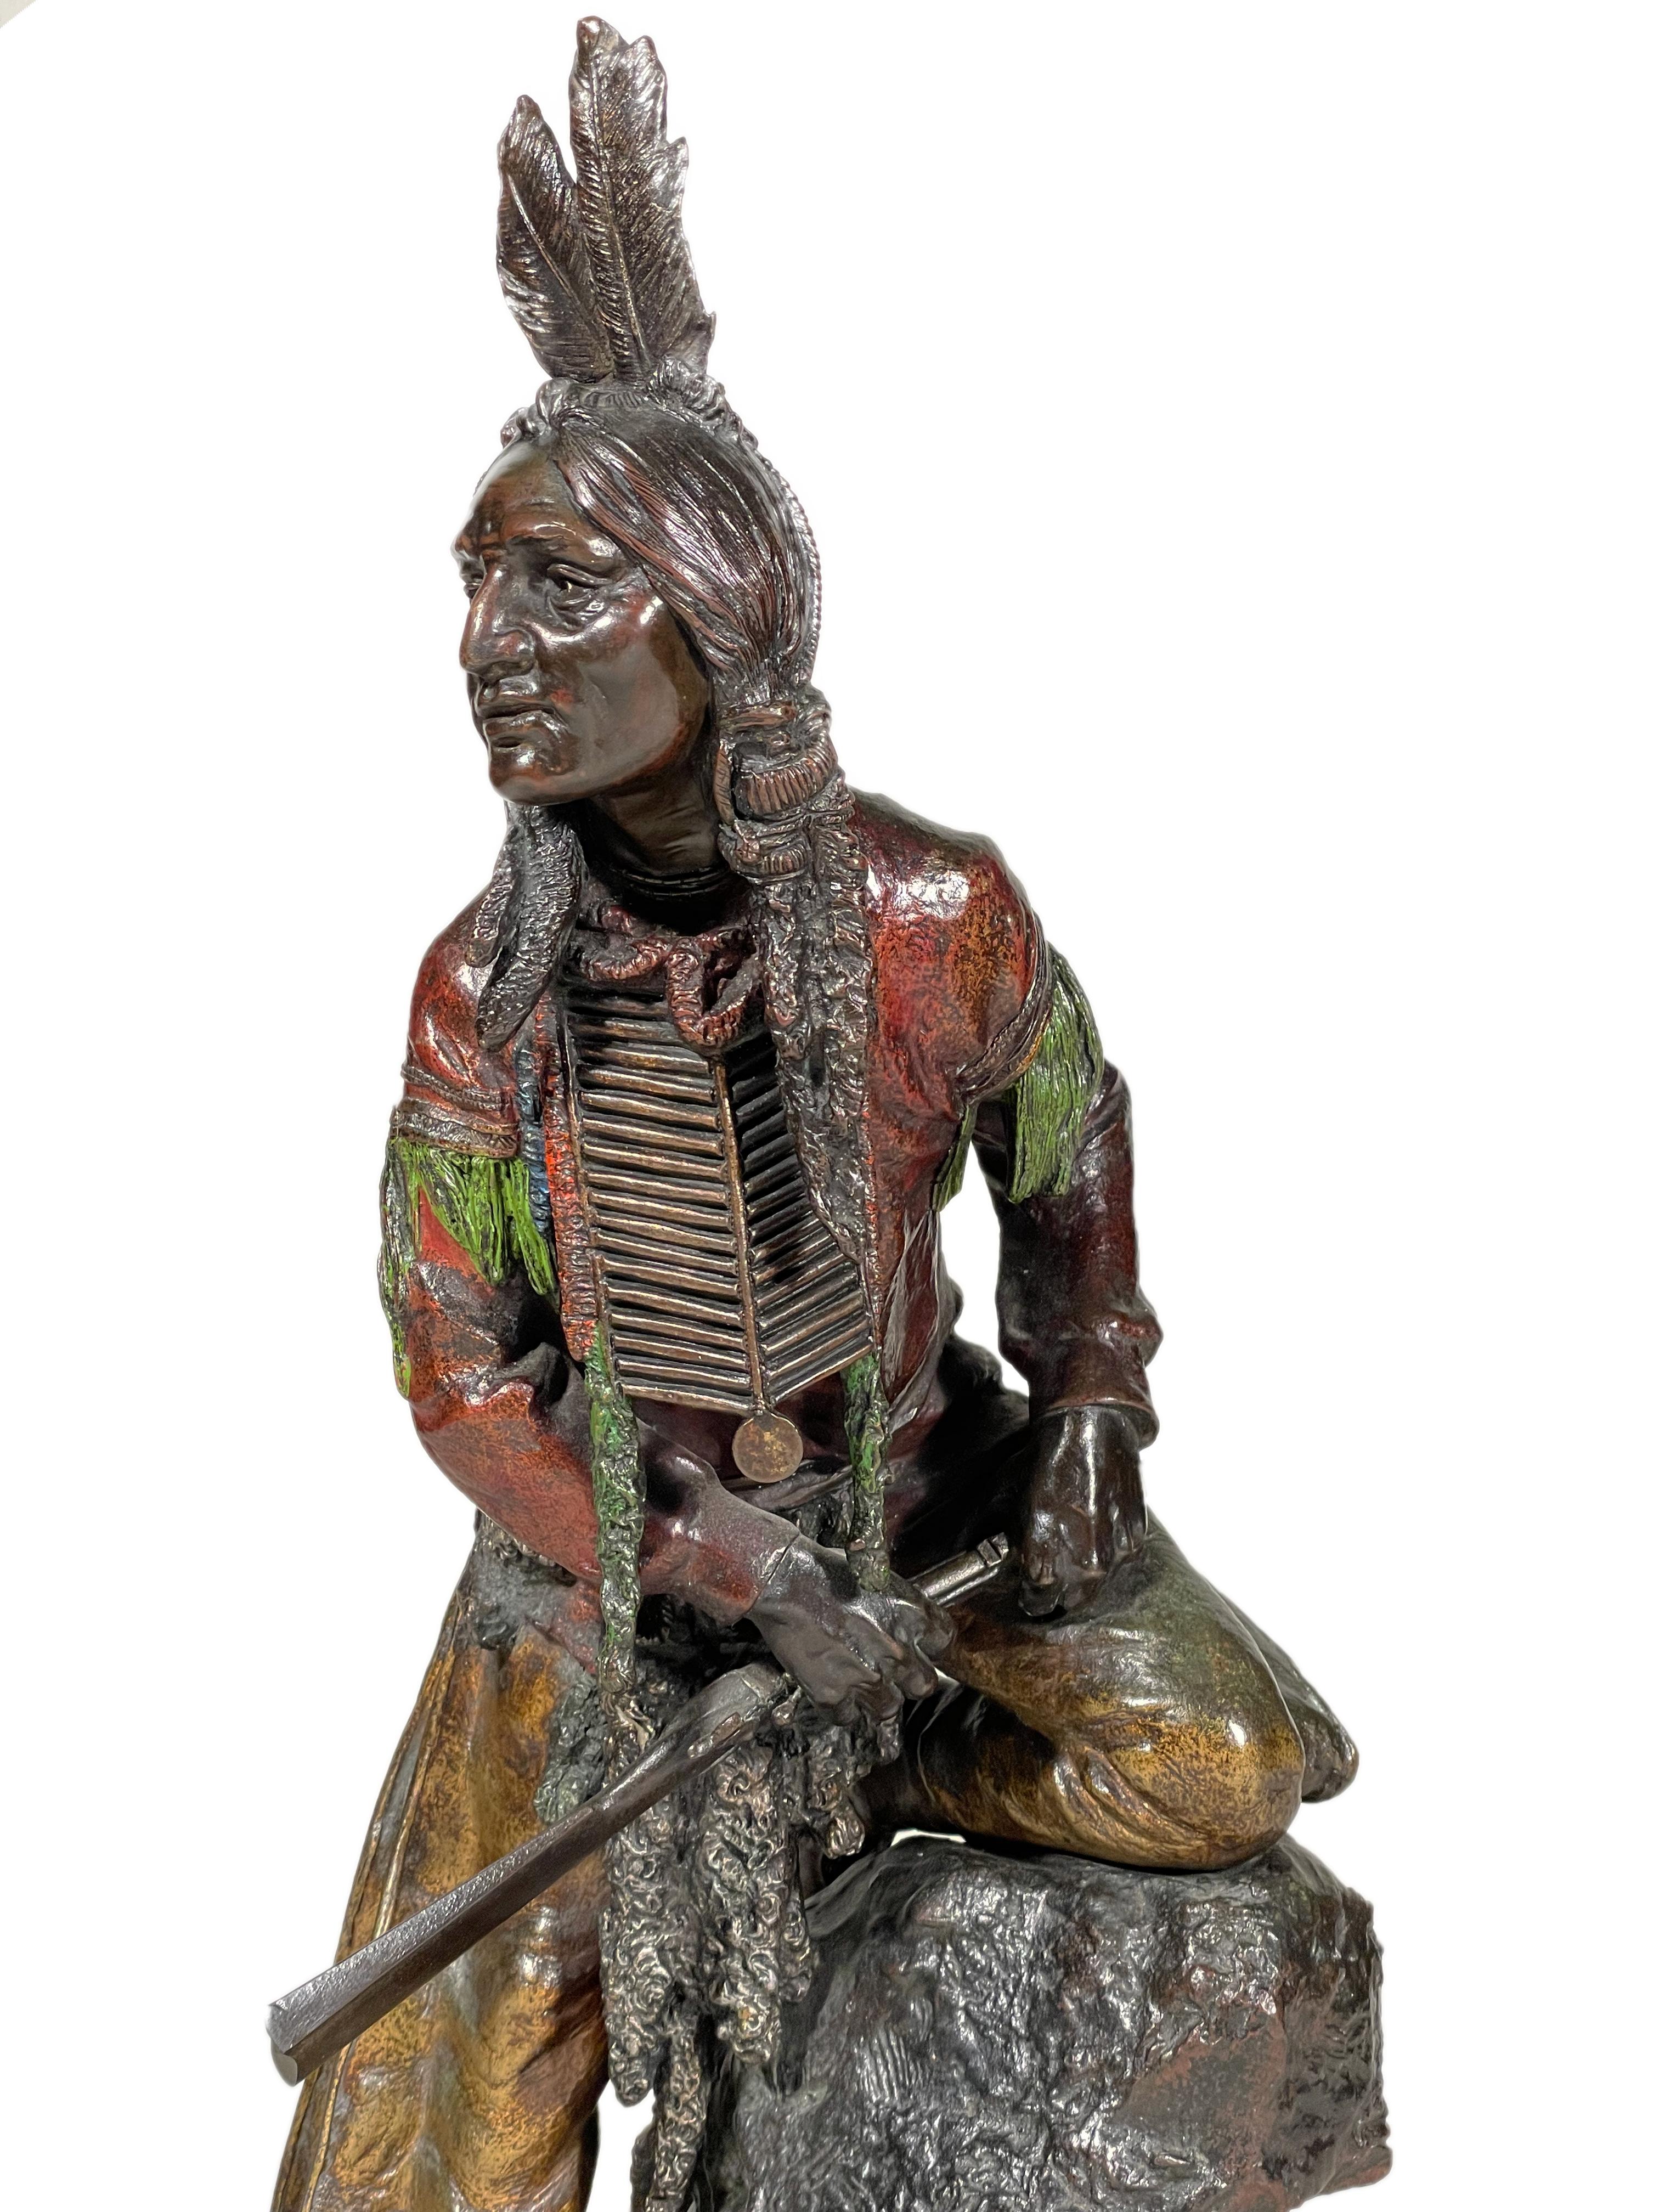 20th Century Austrian Art Nouveau American Indian Bronze “The Scout” by, Carl Kauba